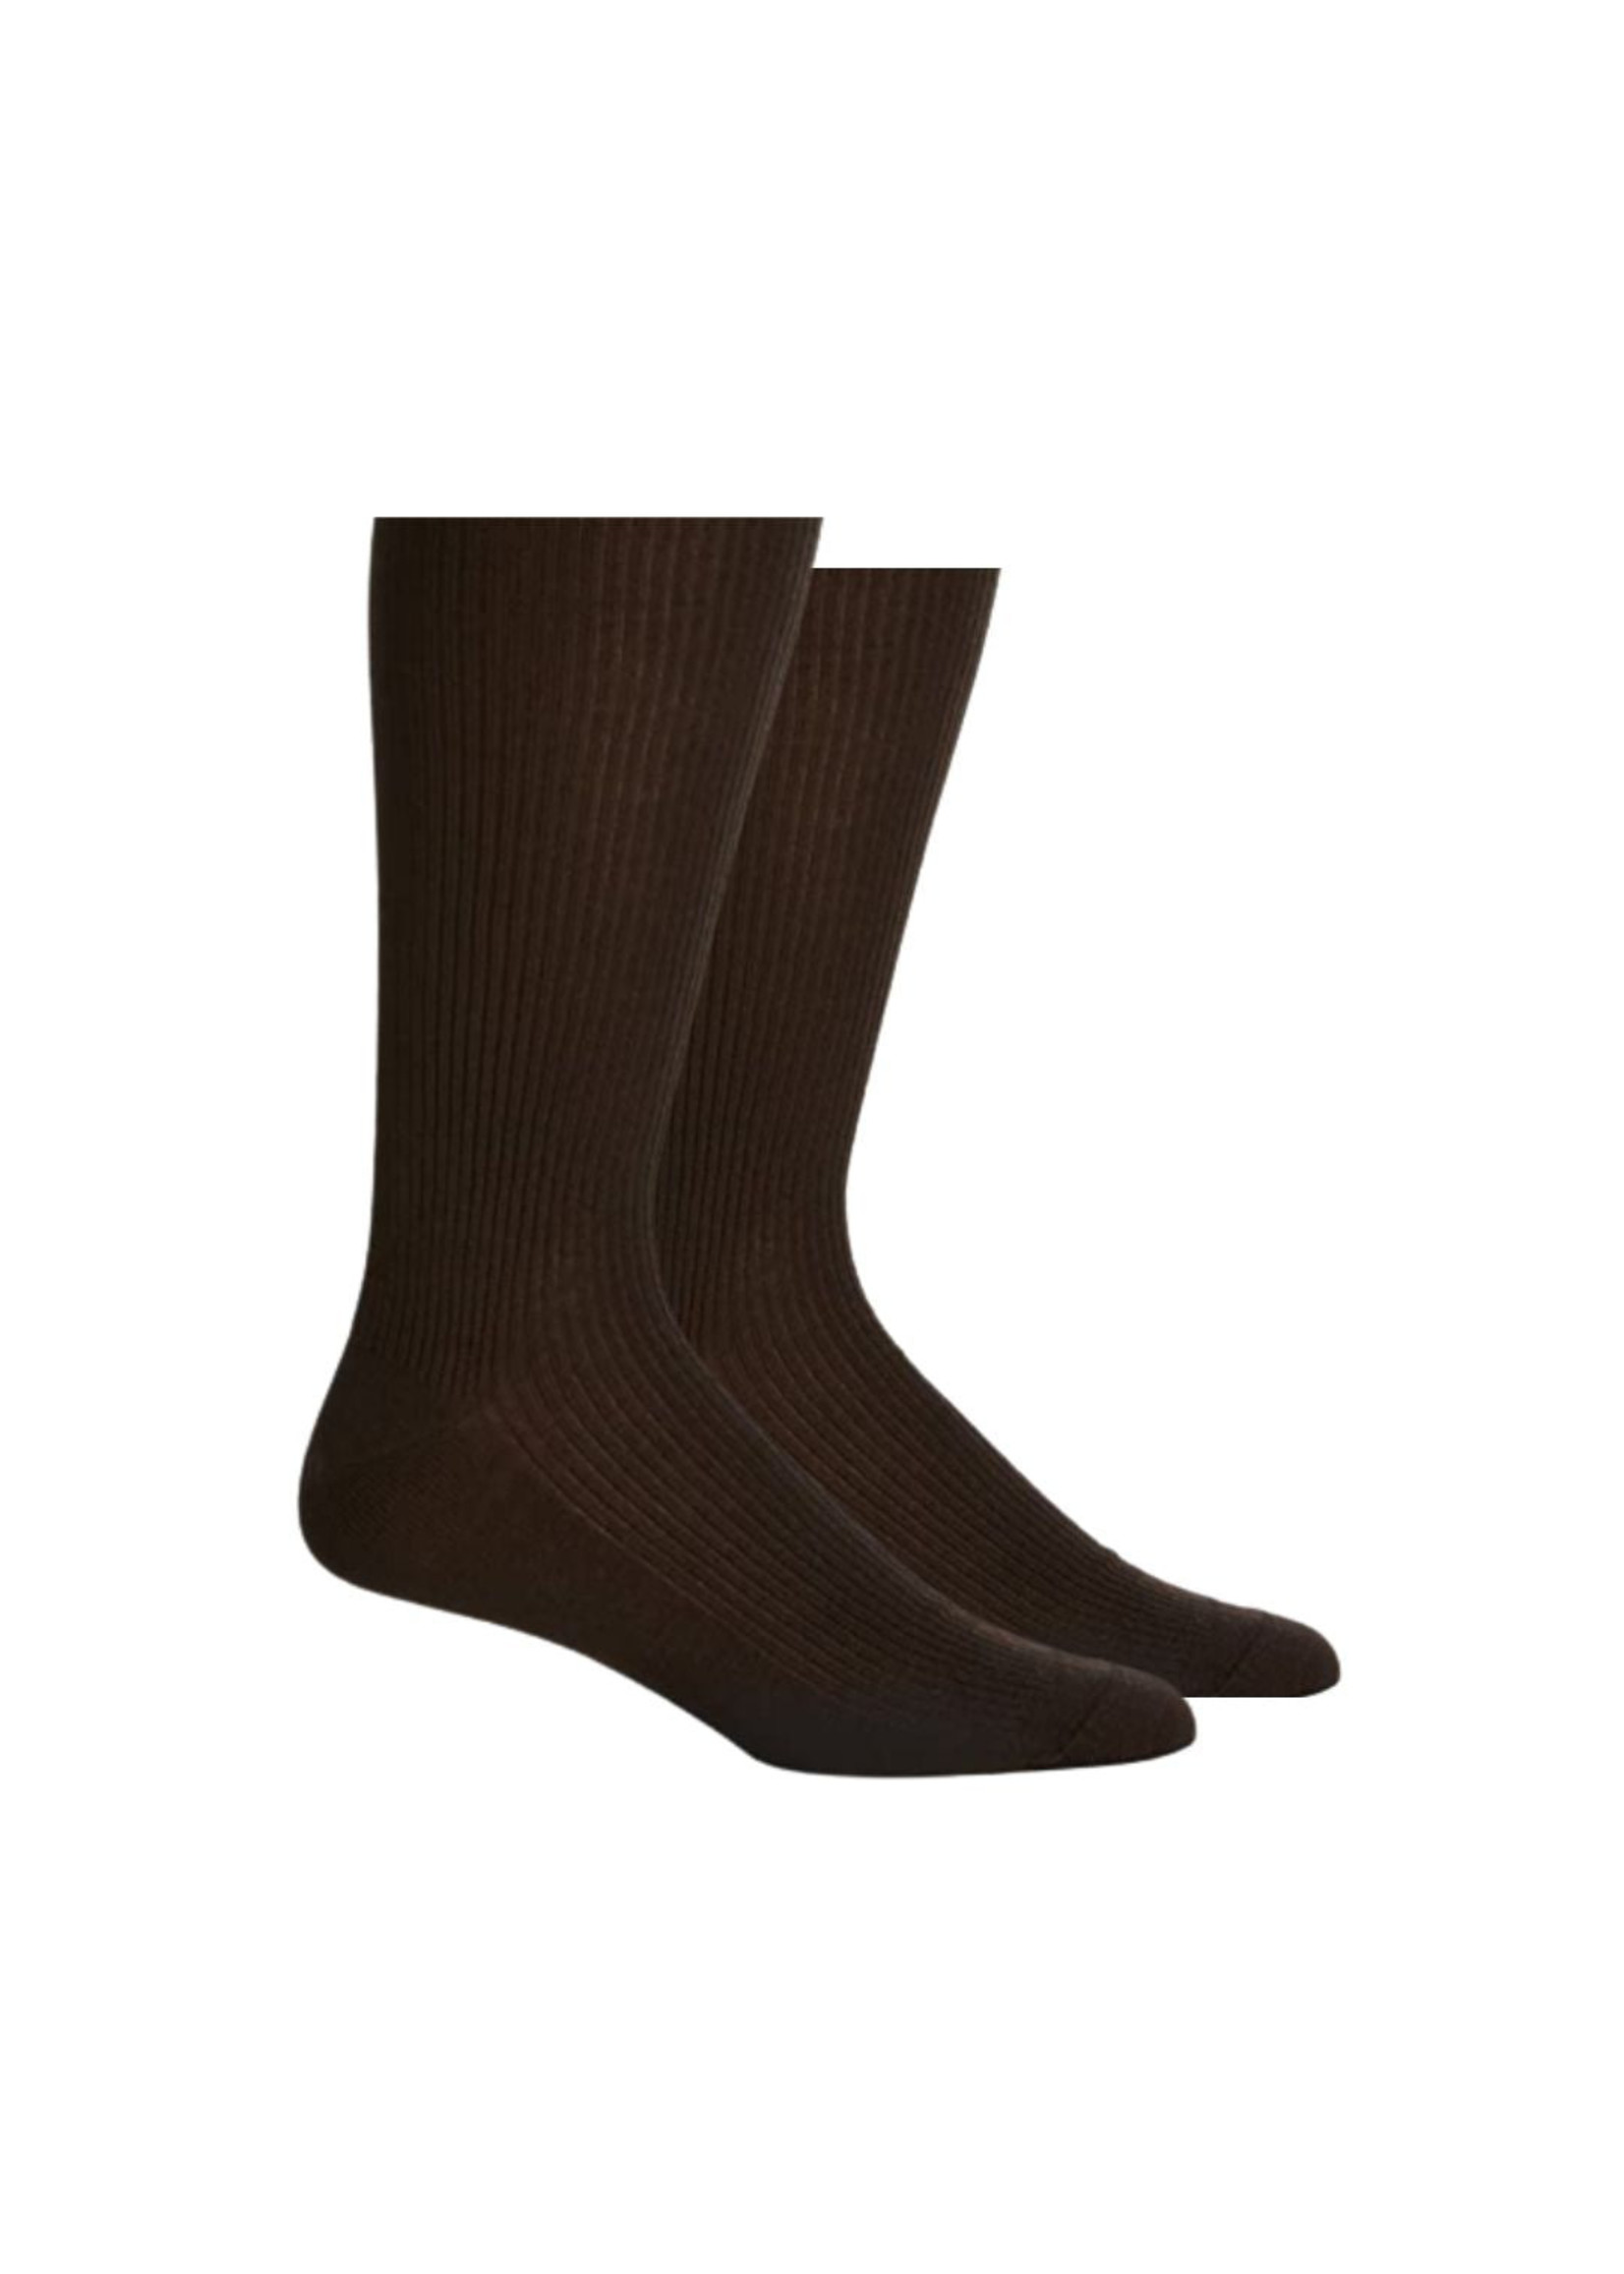 MCGREGOR Men's non-elastic socks